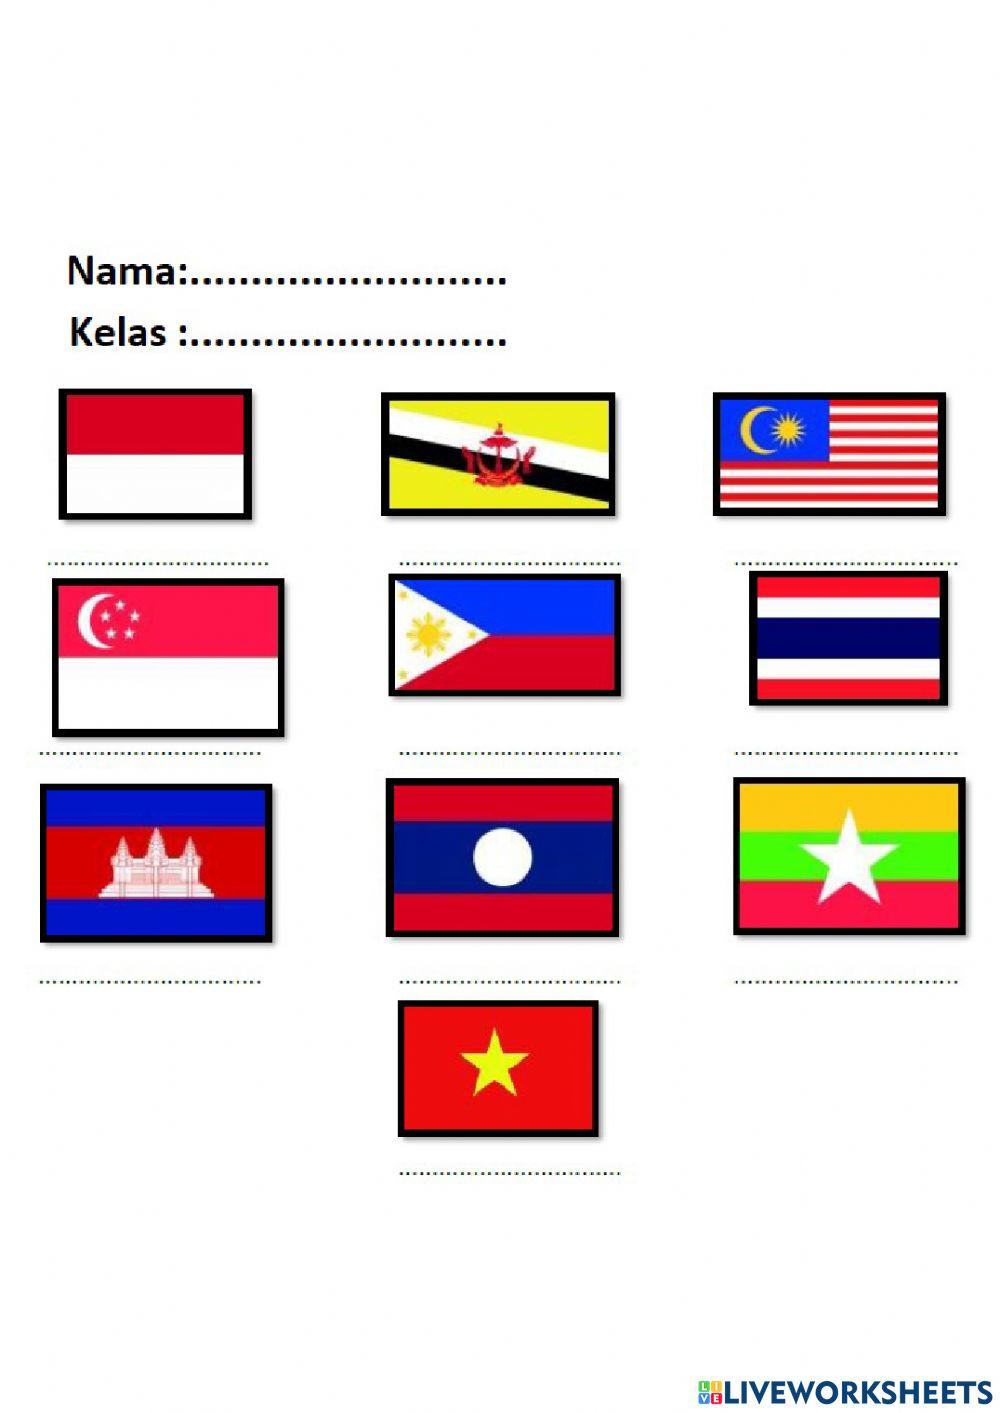 Tulislah nama negara ASEAN berdasarkan benderanya!